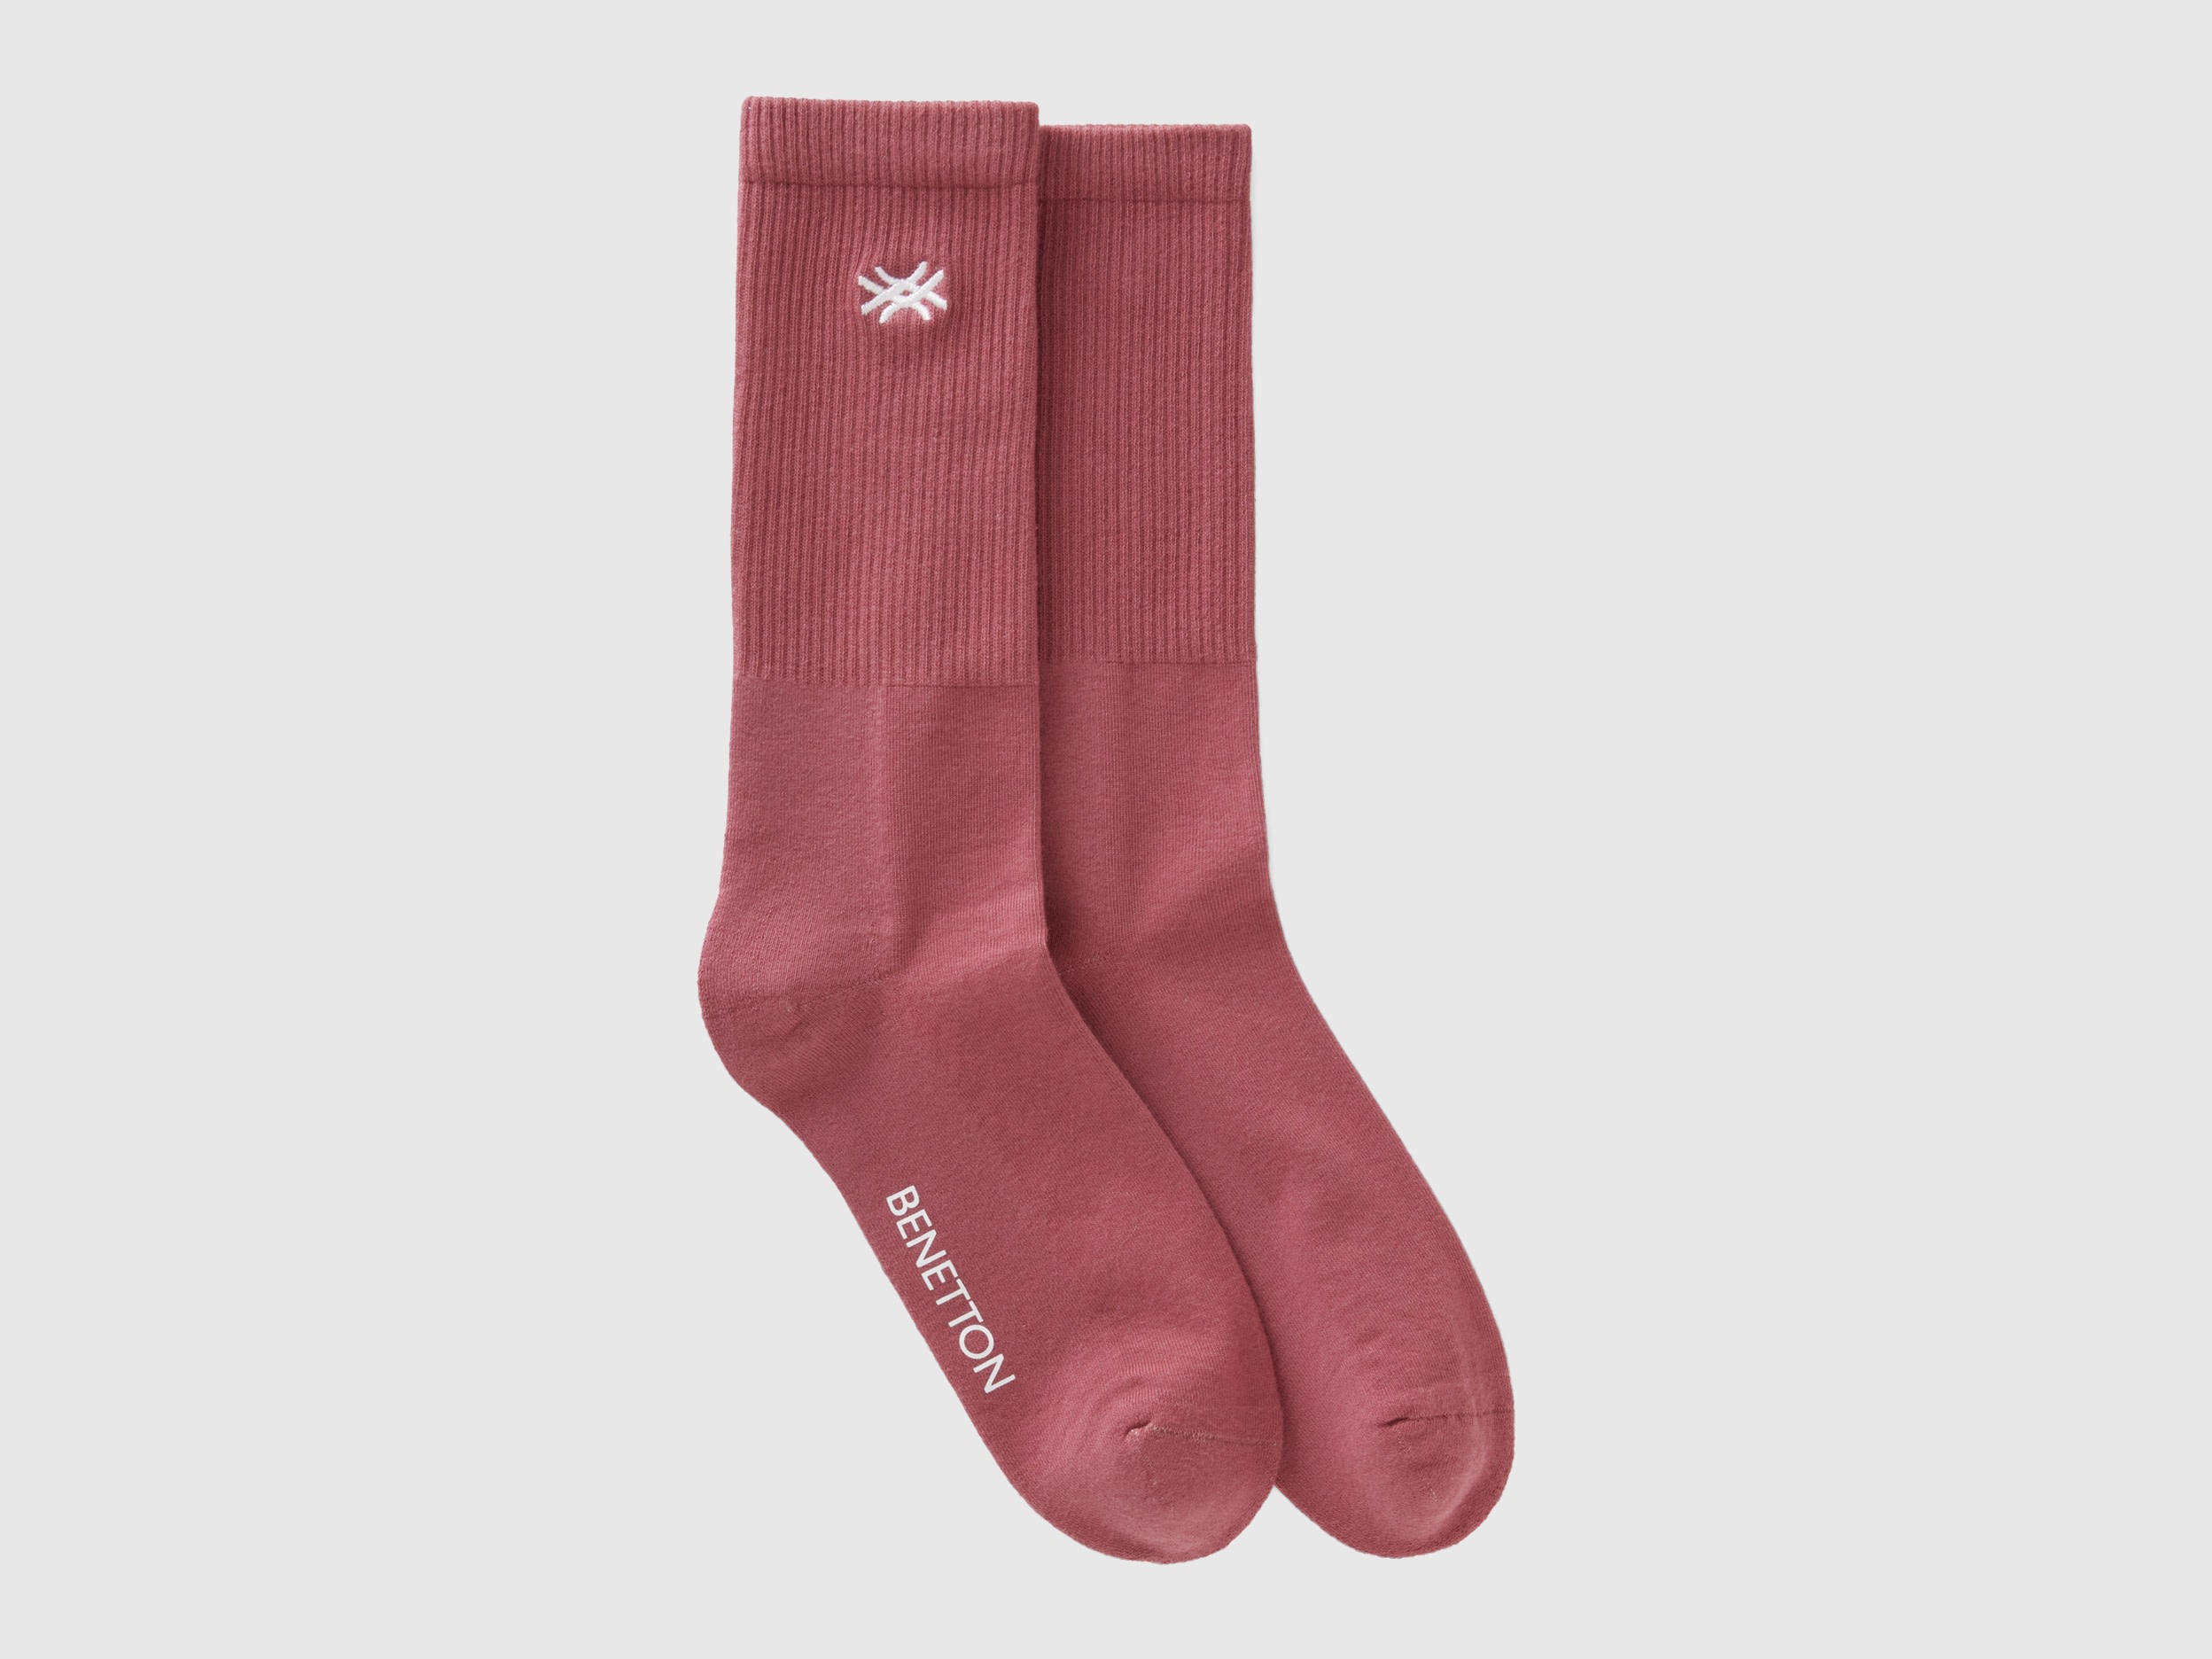 Benetton, Sporty Socks In Organic Cotton Blend, size 8-11, Mauve, Women